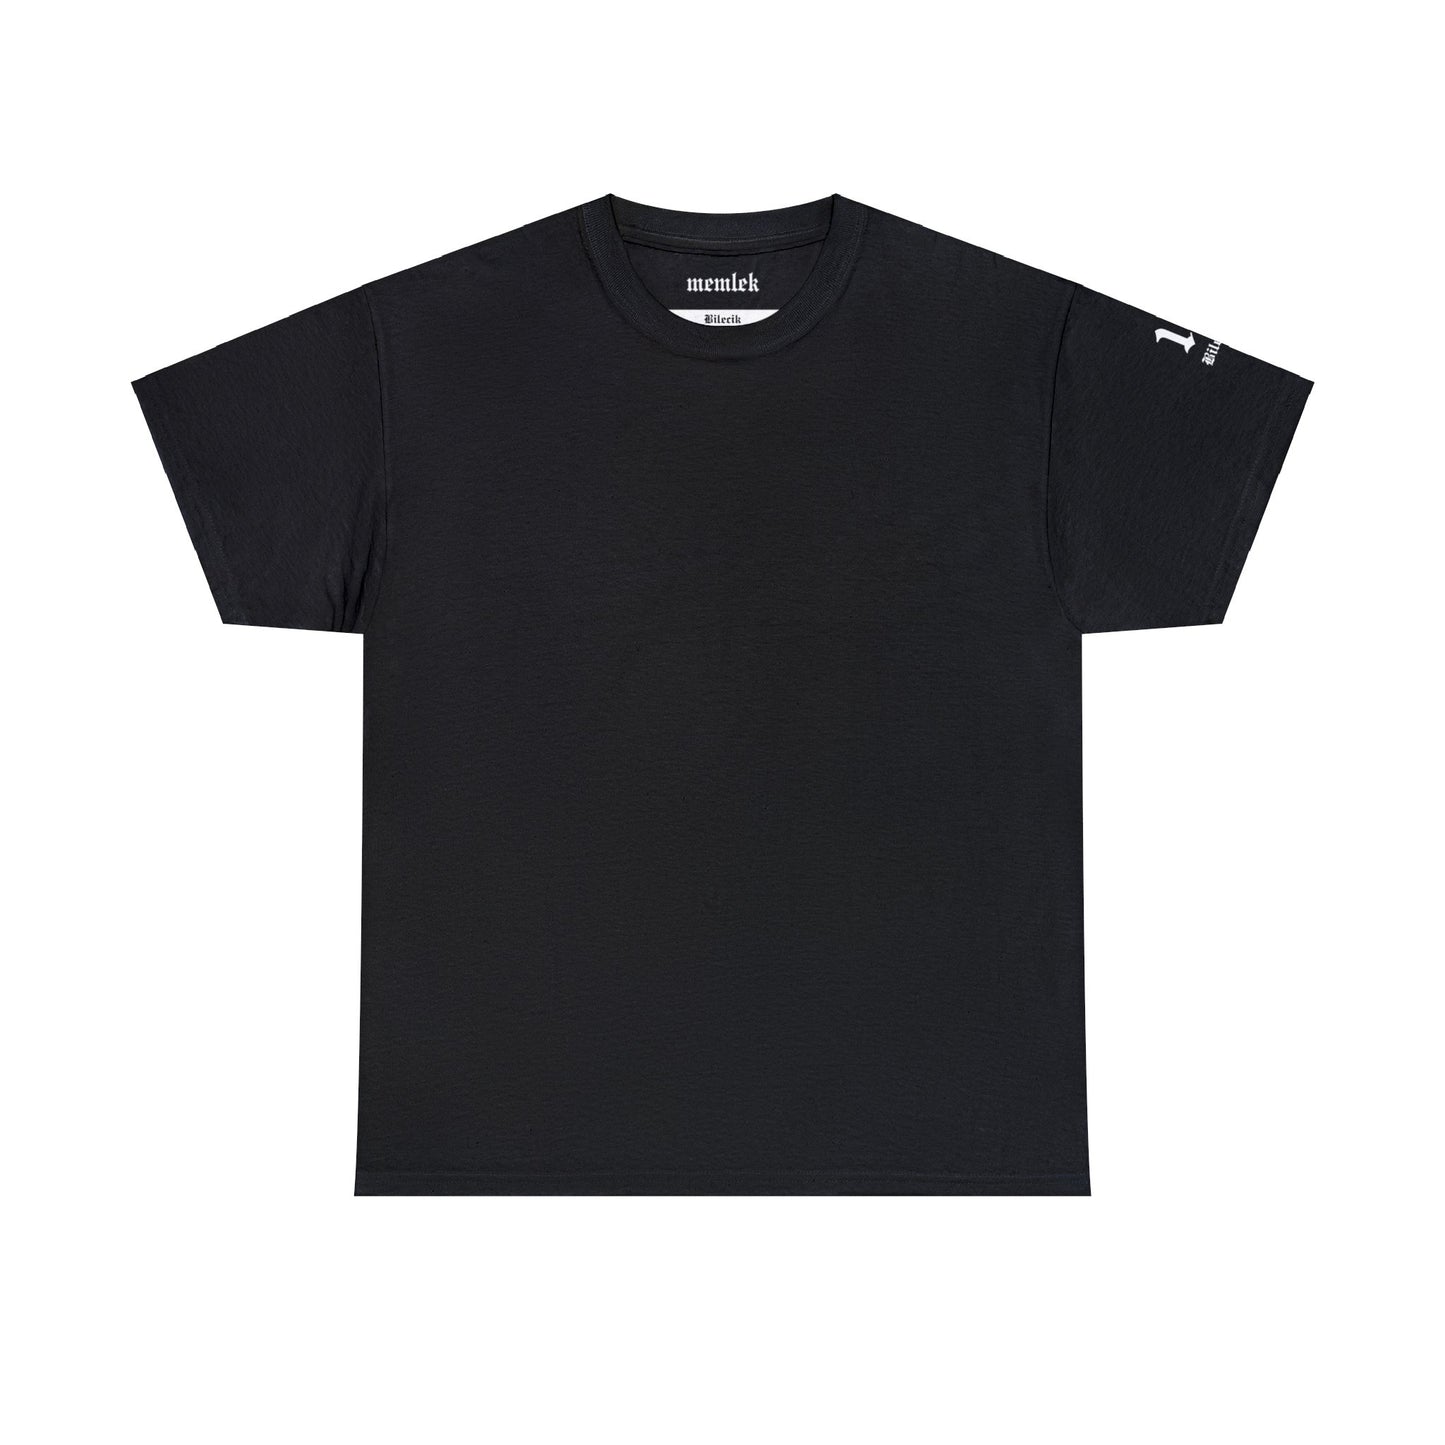 İlçem - 11 Bilecik - T-Shirt - Back Print - Black